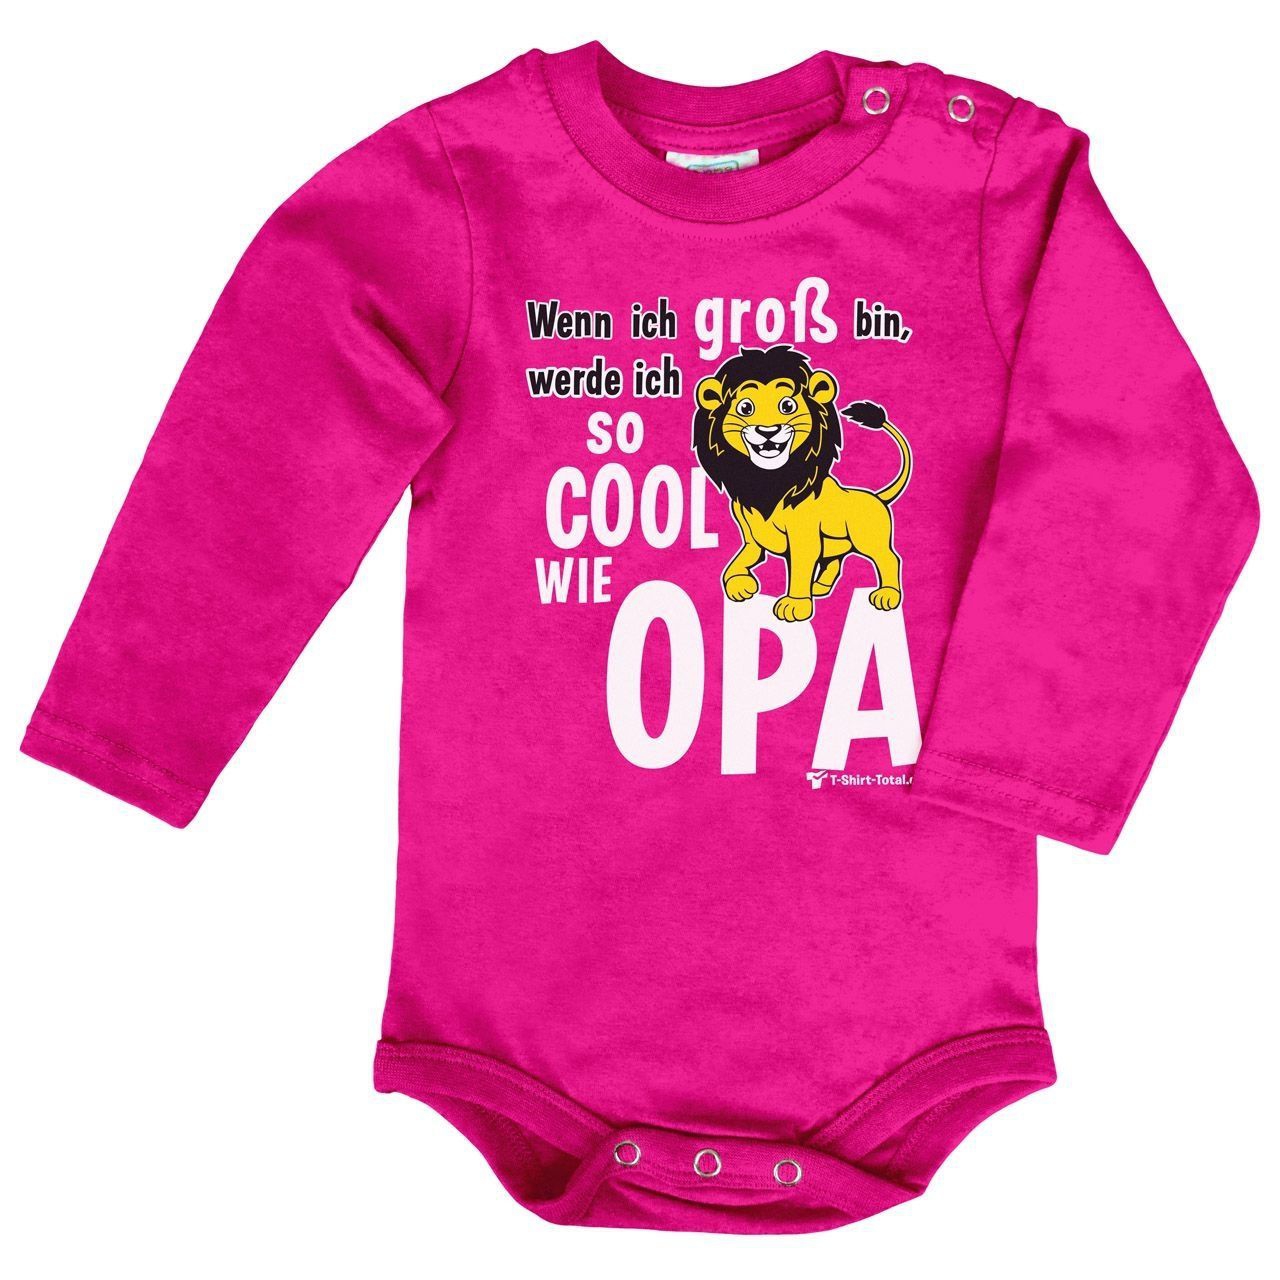 Cool wie Opa Löwe Baby Body Langarm pink 56 / 62